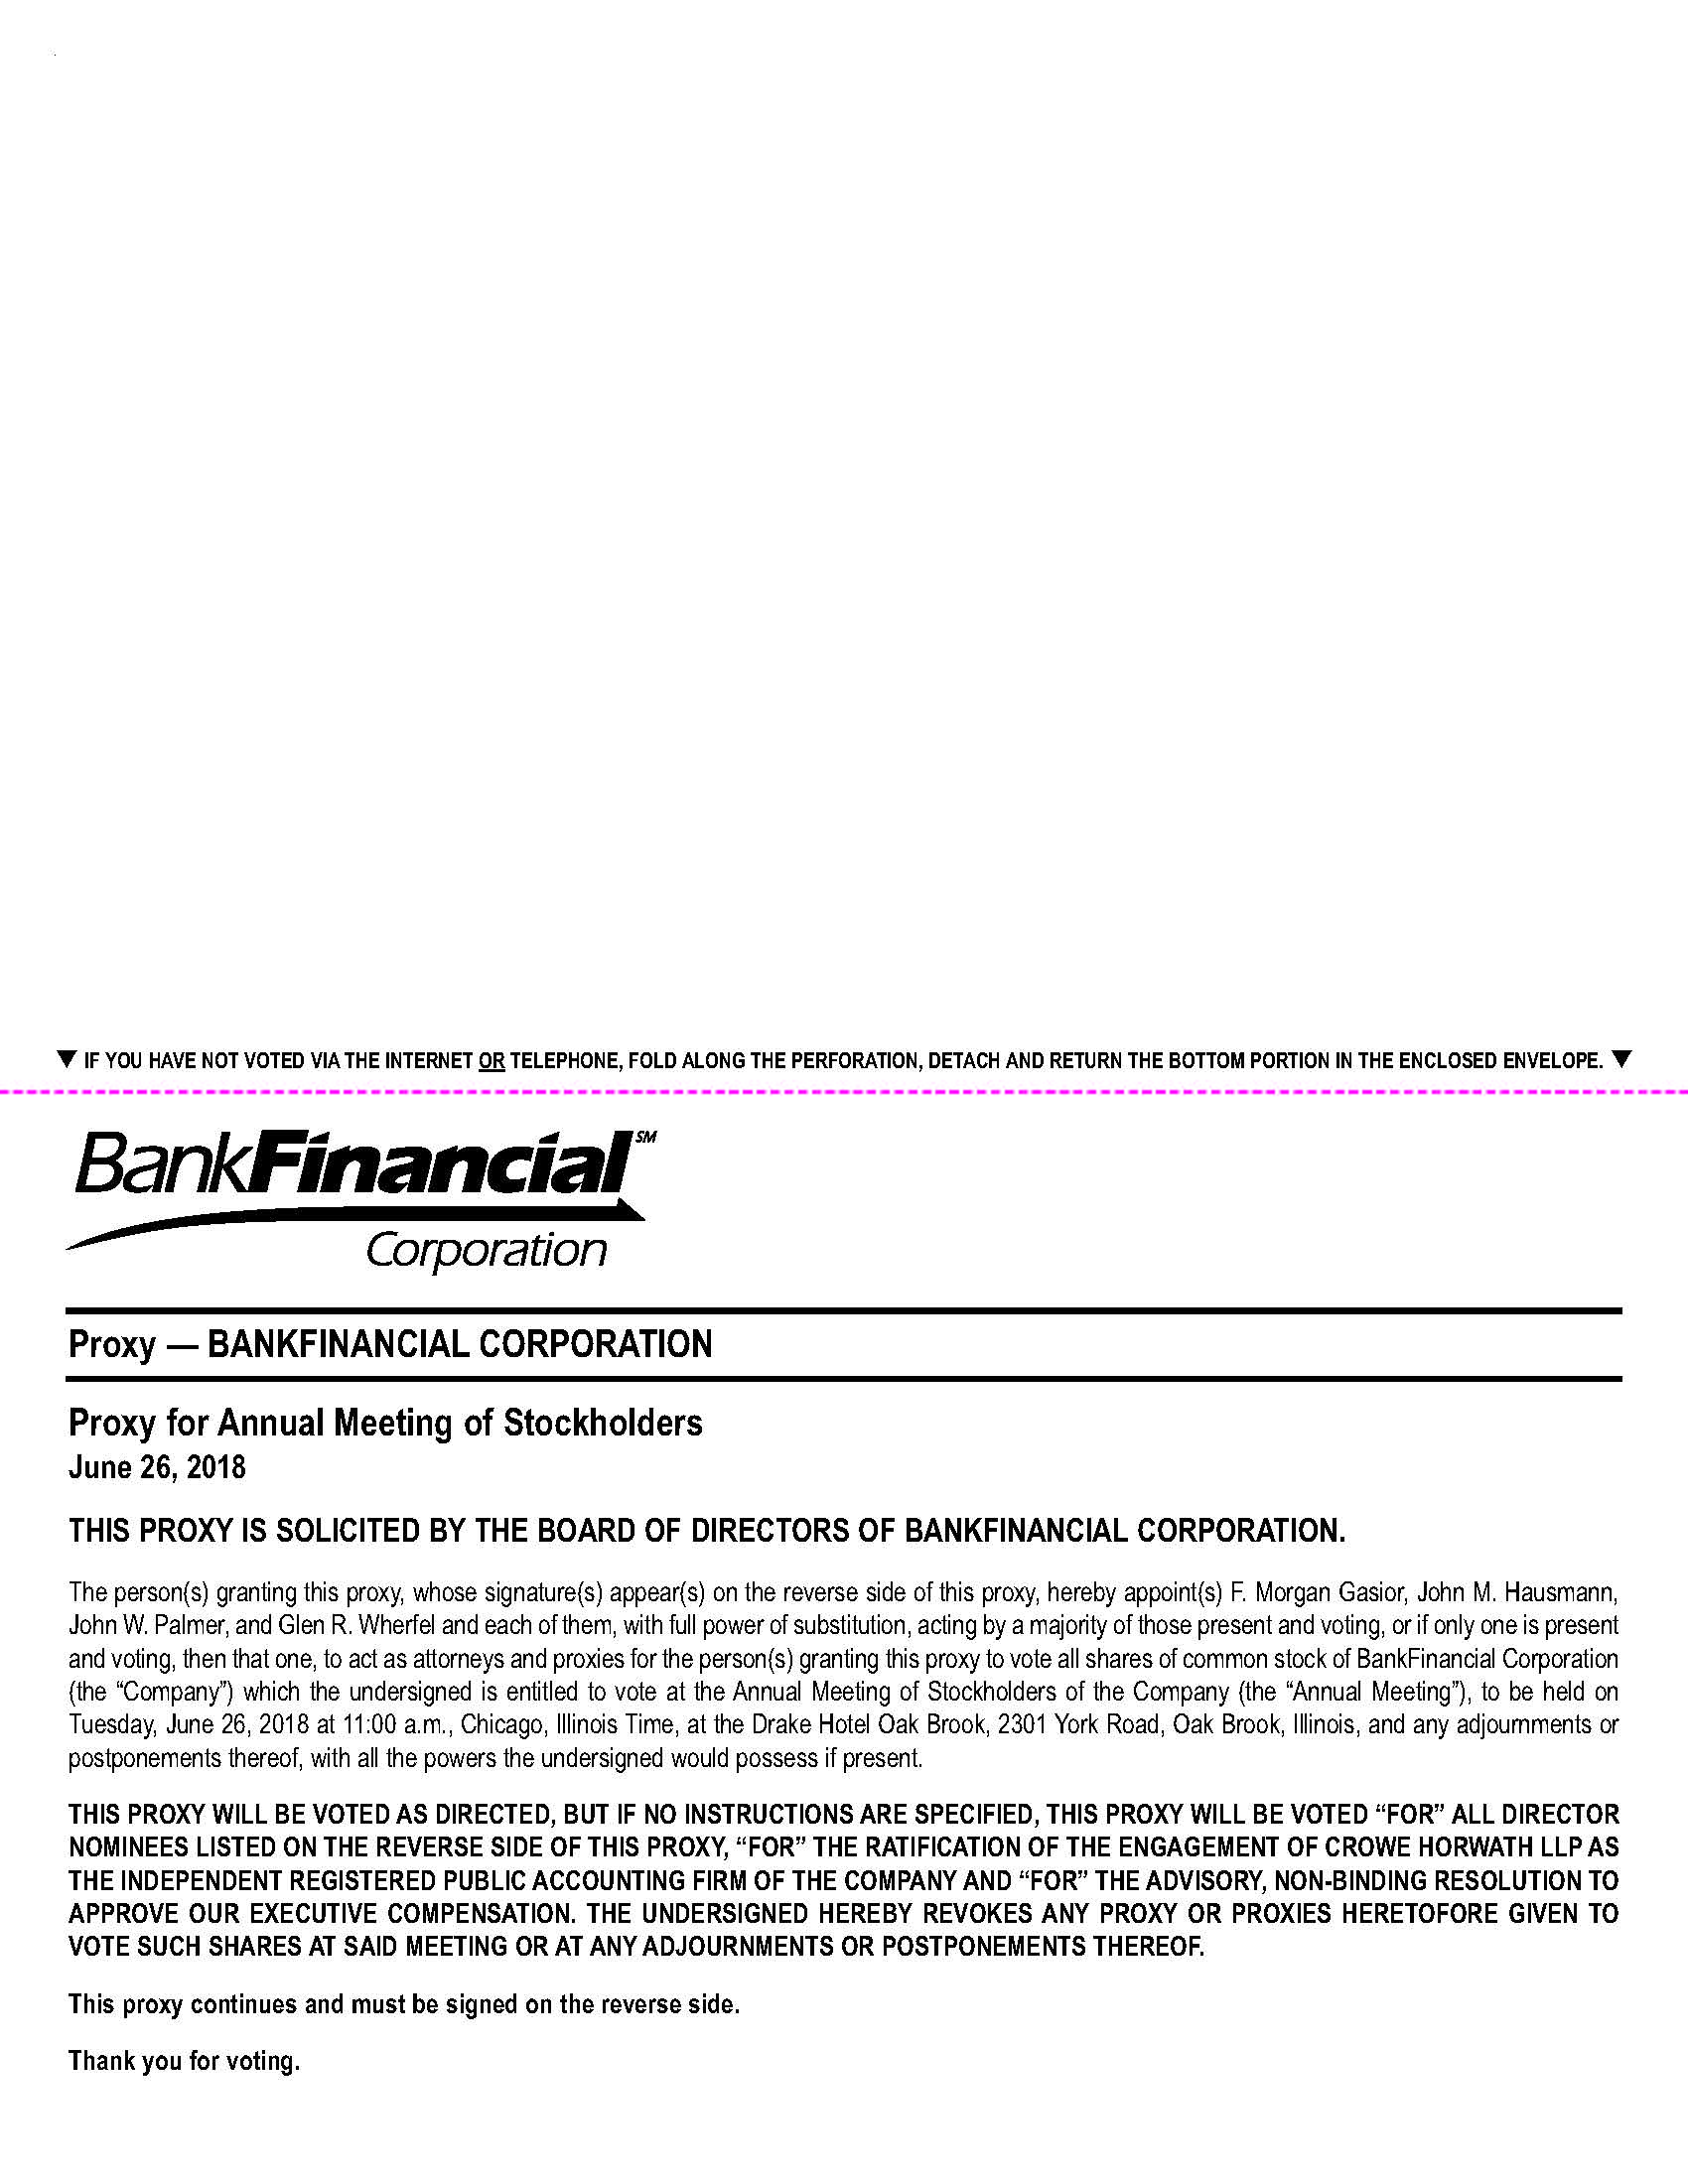 a02s6vebankfinancialcompaa01.jpg